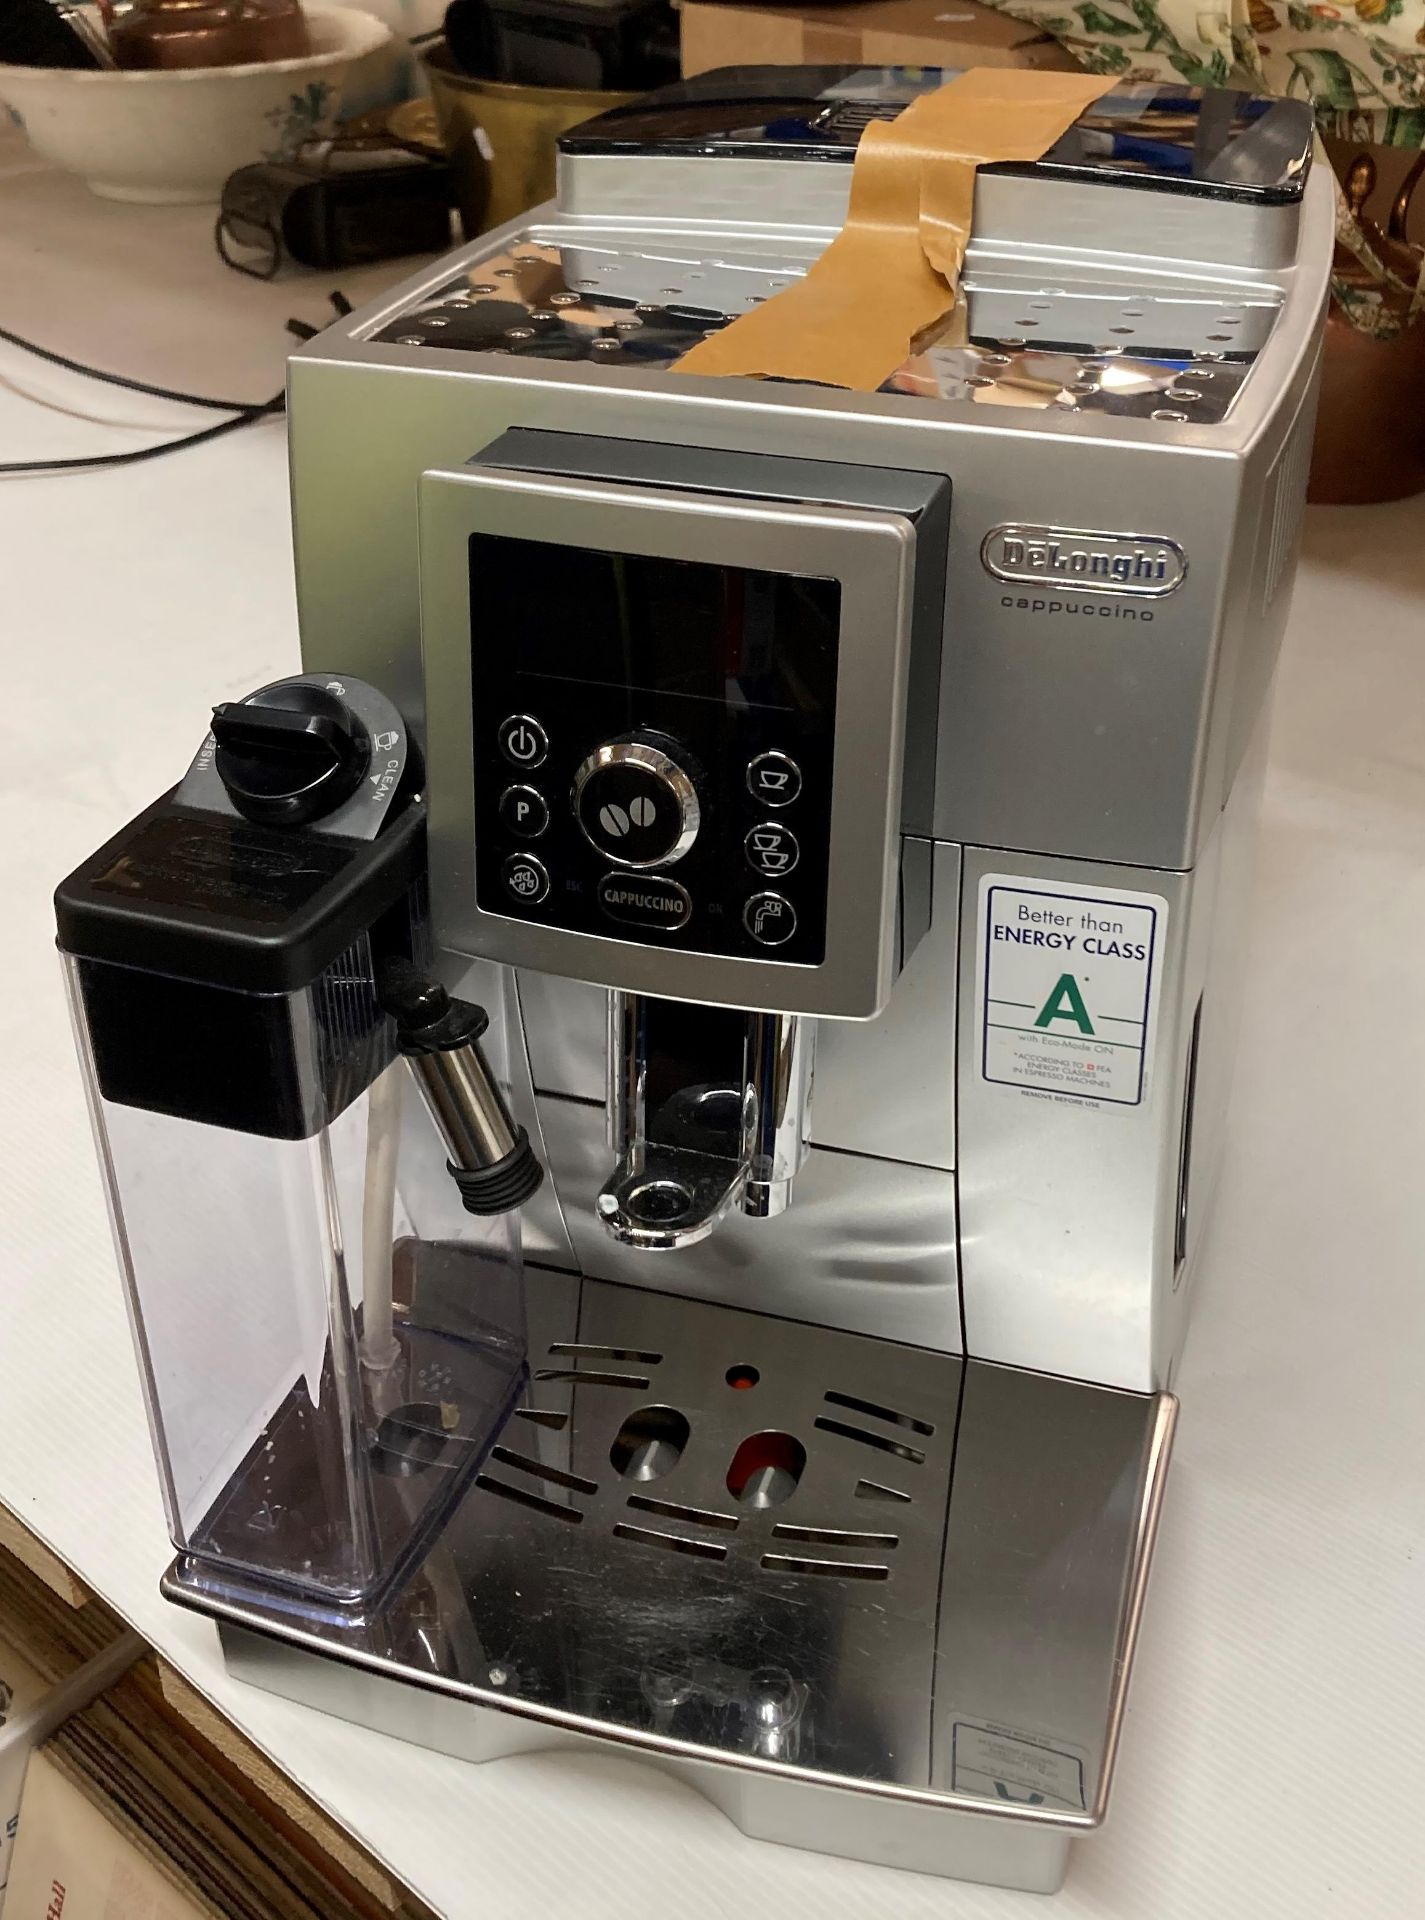 Delonghi cappuccino bean to cup coffee machine (saleroom location: L11) Further